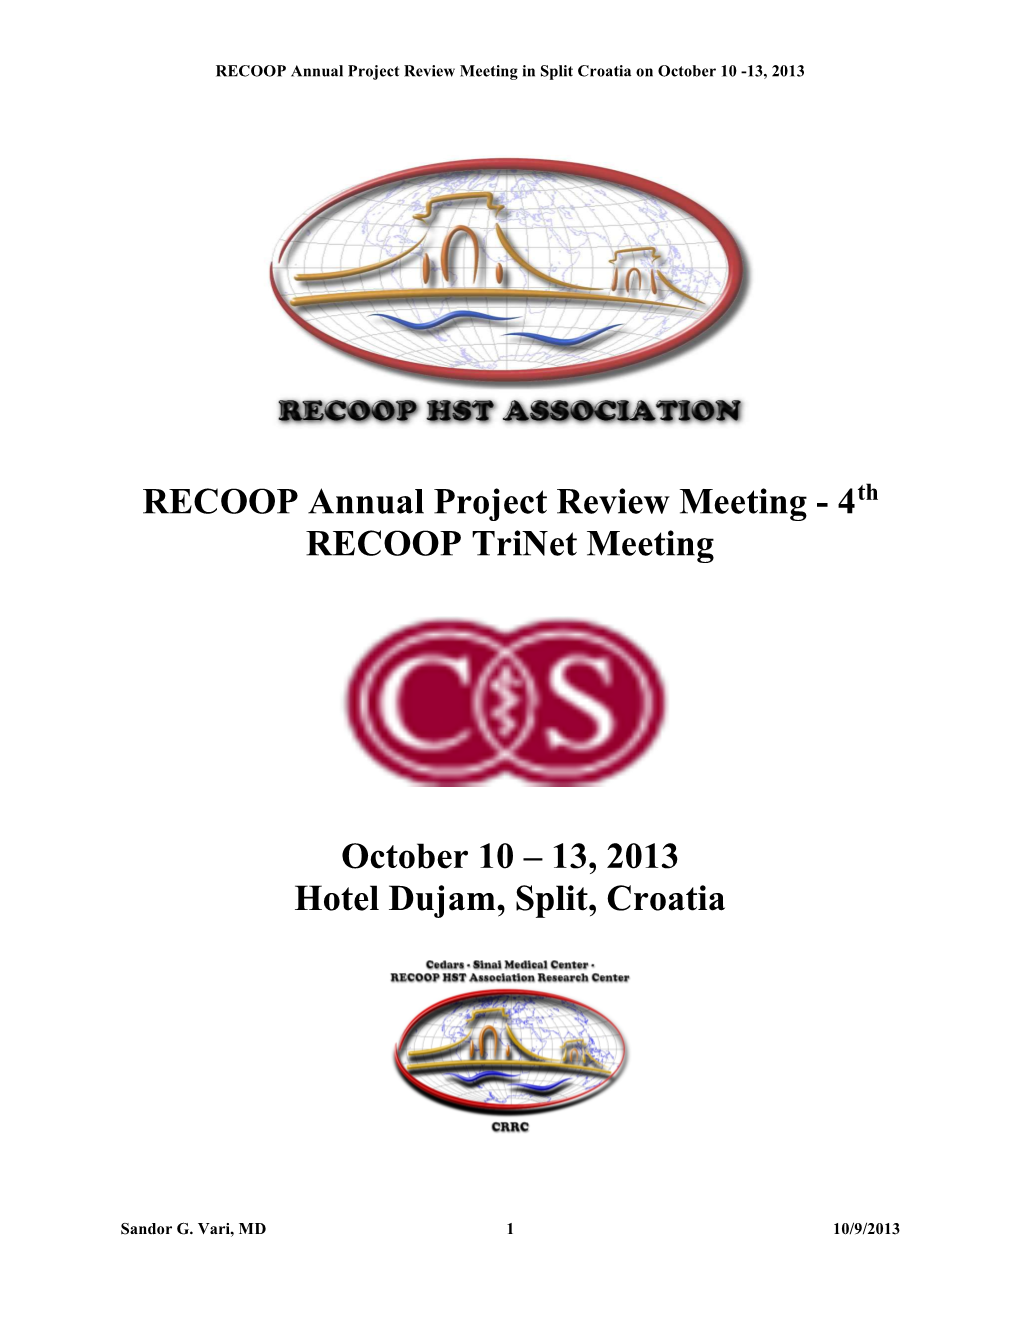 4Th Annual Meeting, October 10-13, 2013, in Split, Croatia